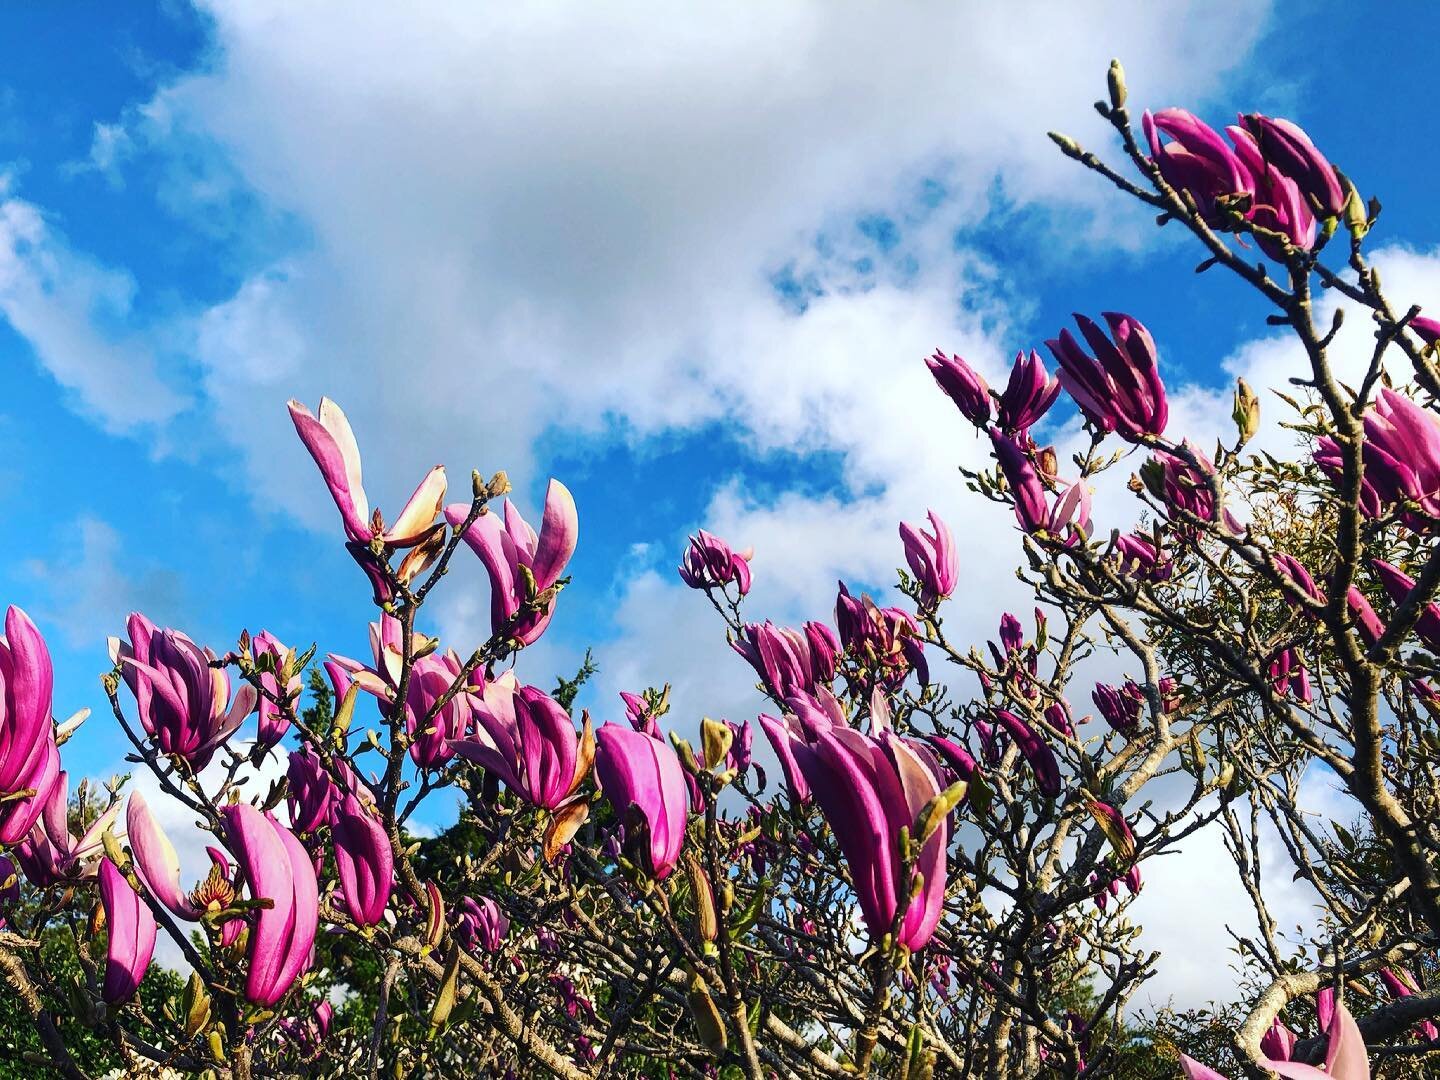 SPRING FORWARD 🌺🌸🌼🌻
March 14th @ 2am 
.
.
.
.
#daylightsavings #springforward #humboldt #magnolia #jane #spring #classes #nature #create #share #teachingkitchen #plantsheal #beautiful #springtime #california